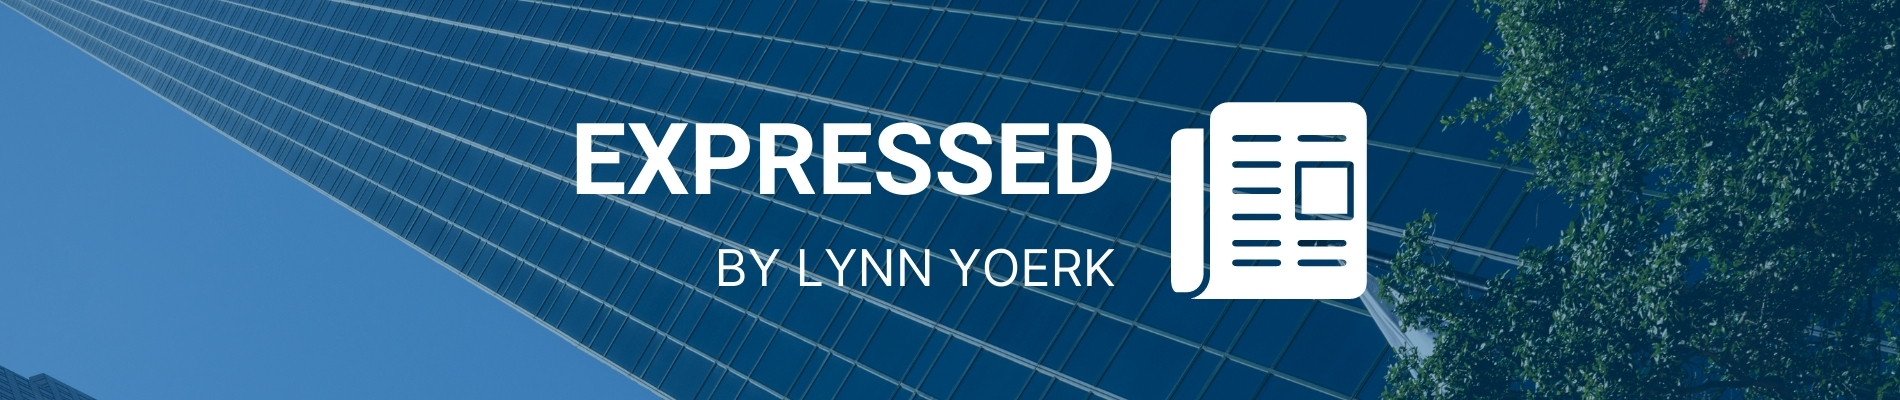 Expressed by Lynn Yoerk - Owner's Blog Banner